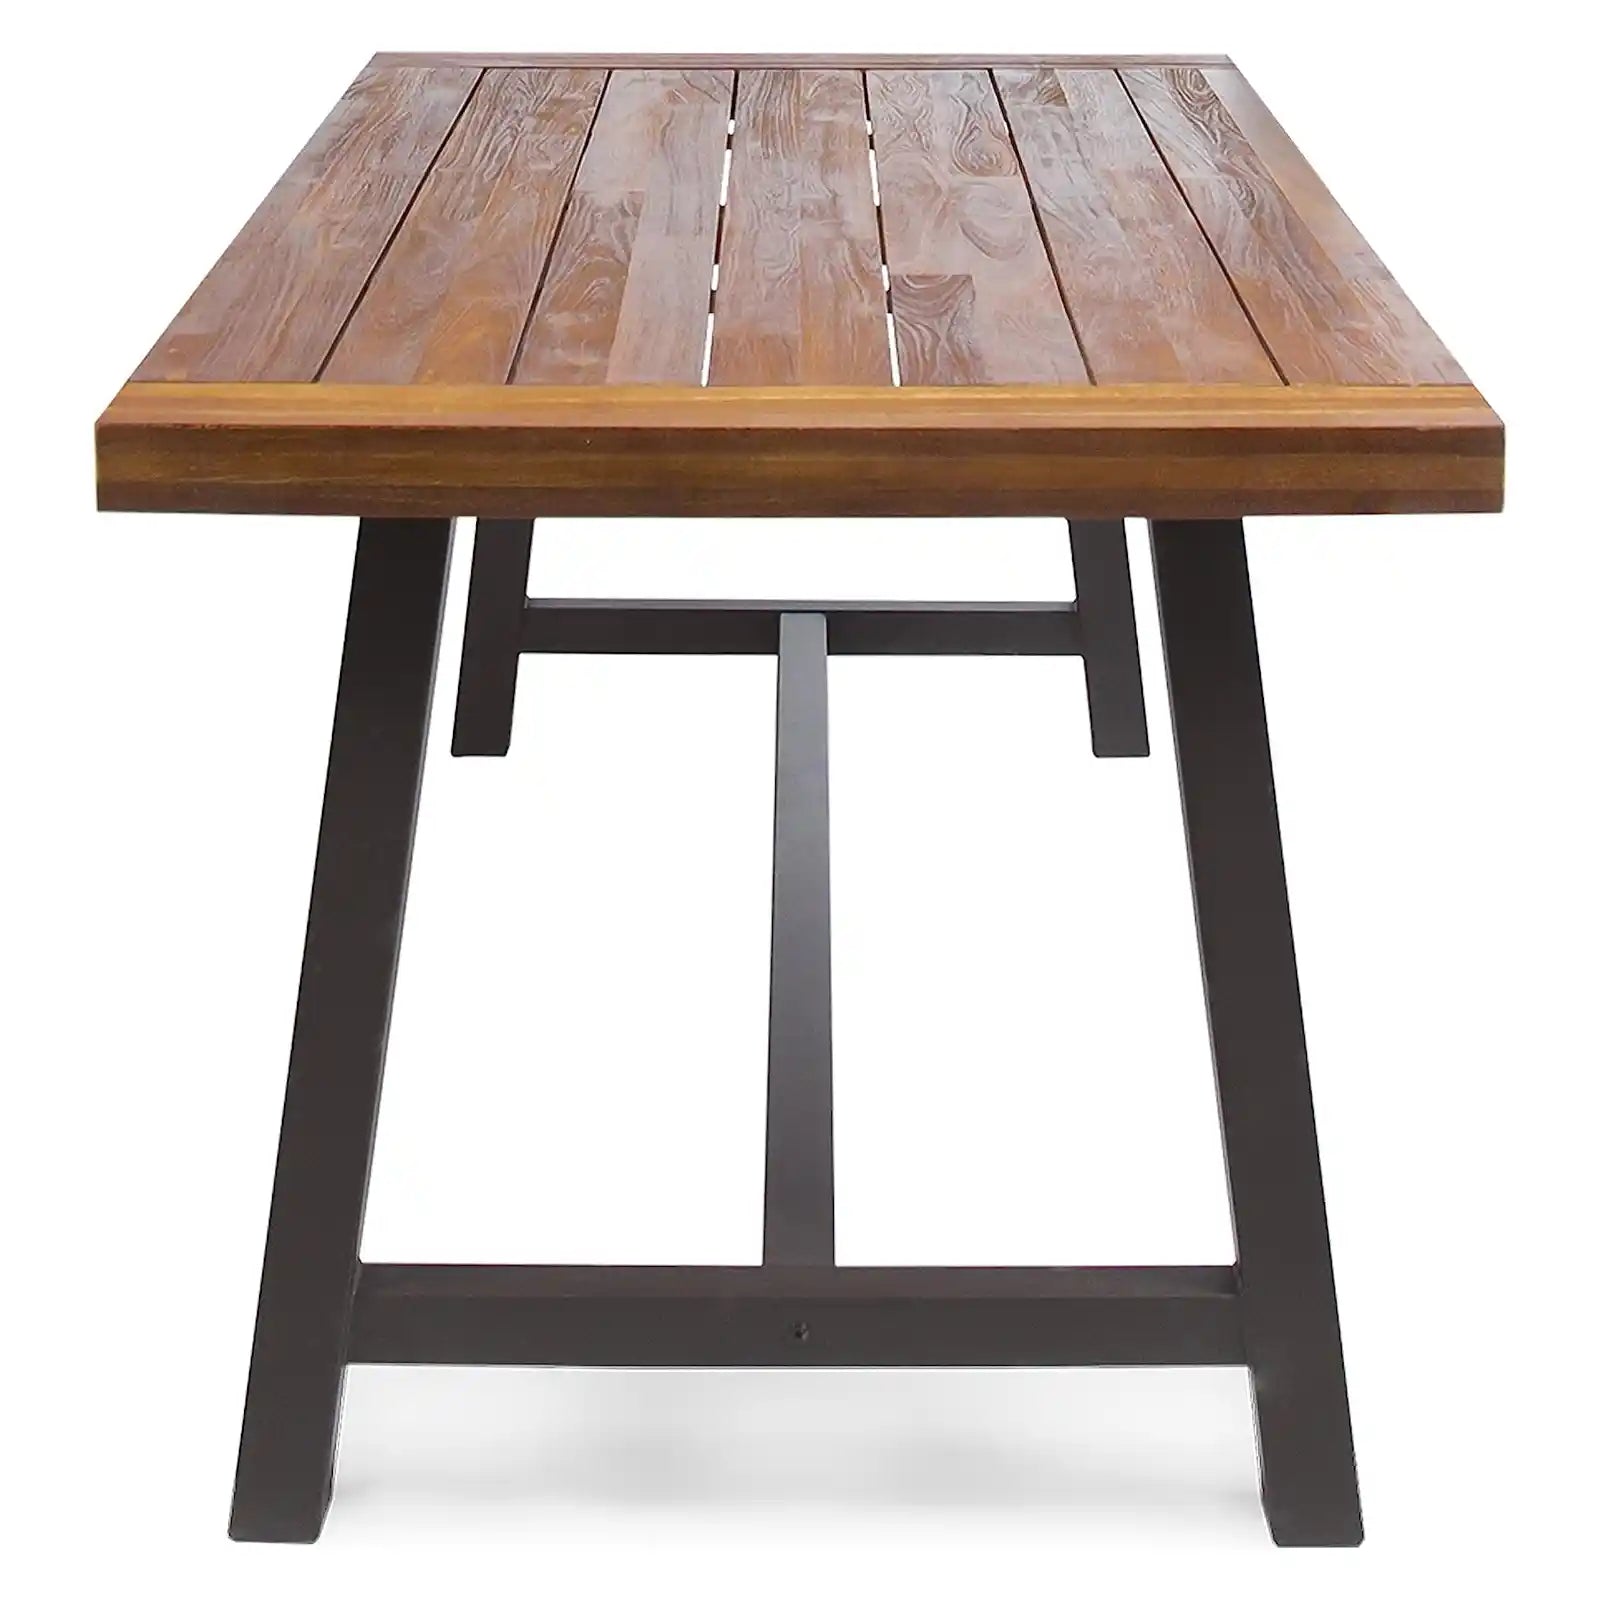 Outdoor Dining Table with Iron Legs, Sandblast Finish / Rustic Metal